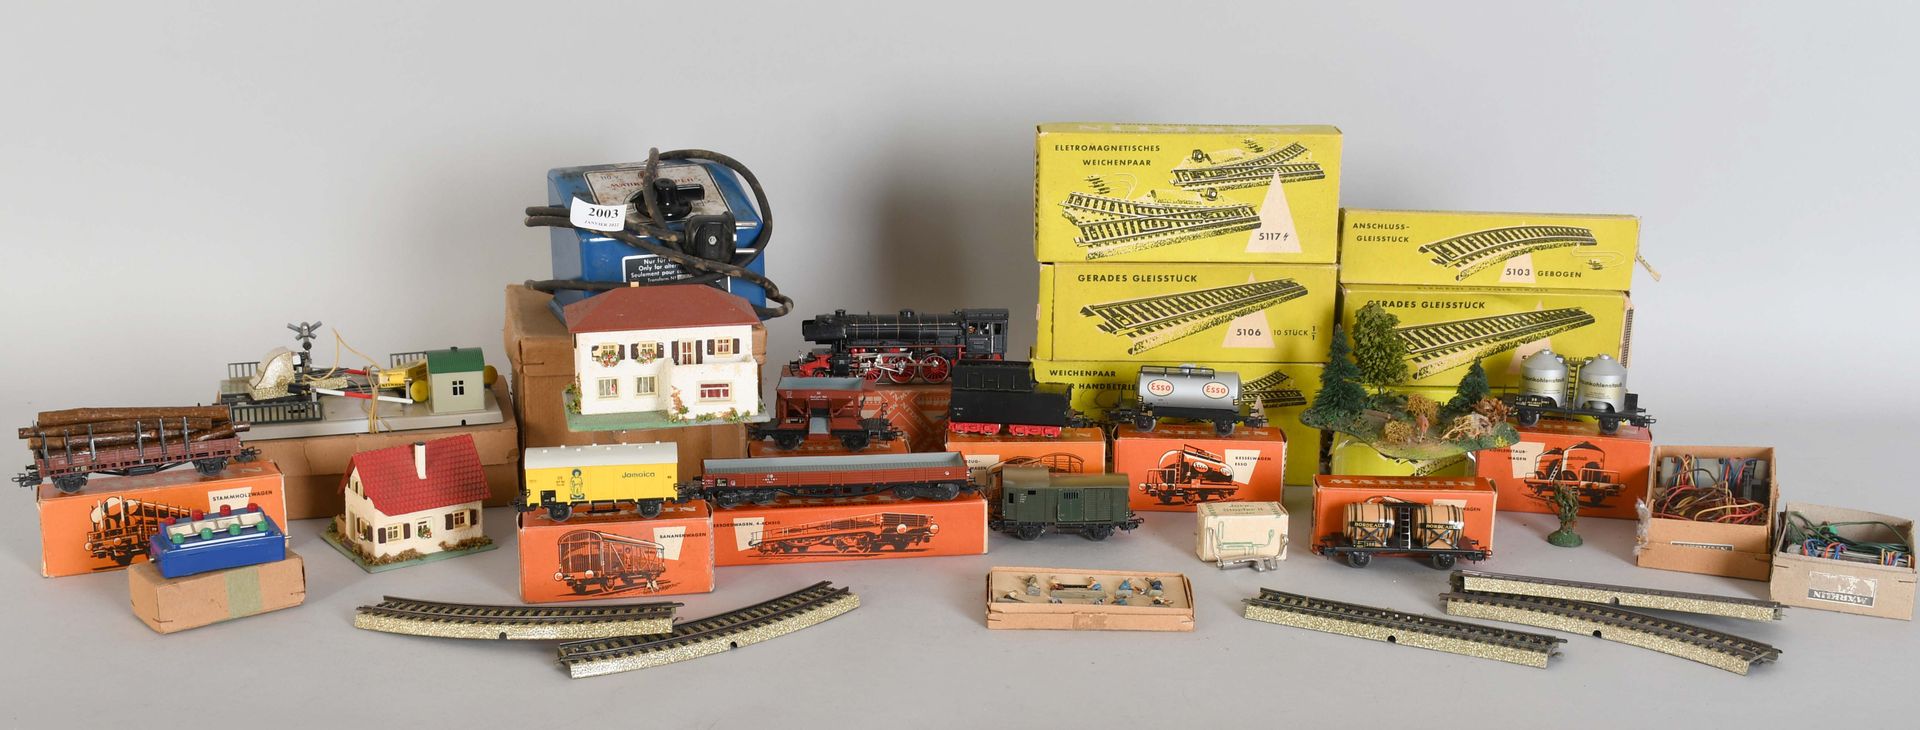 Null Marklin

Locomotive, tander, cars, level crossing, figurines, tracks, signa&hellip;